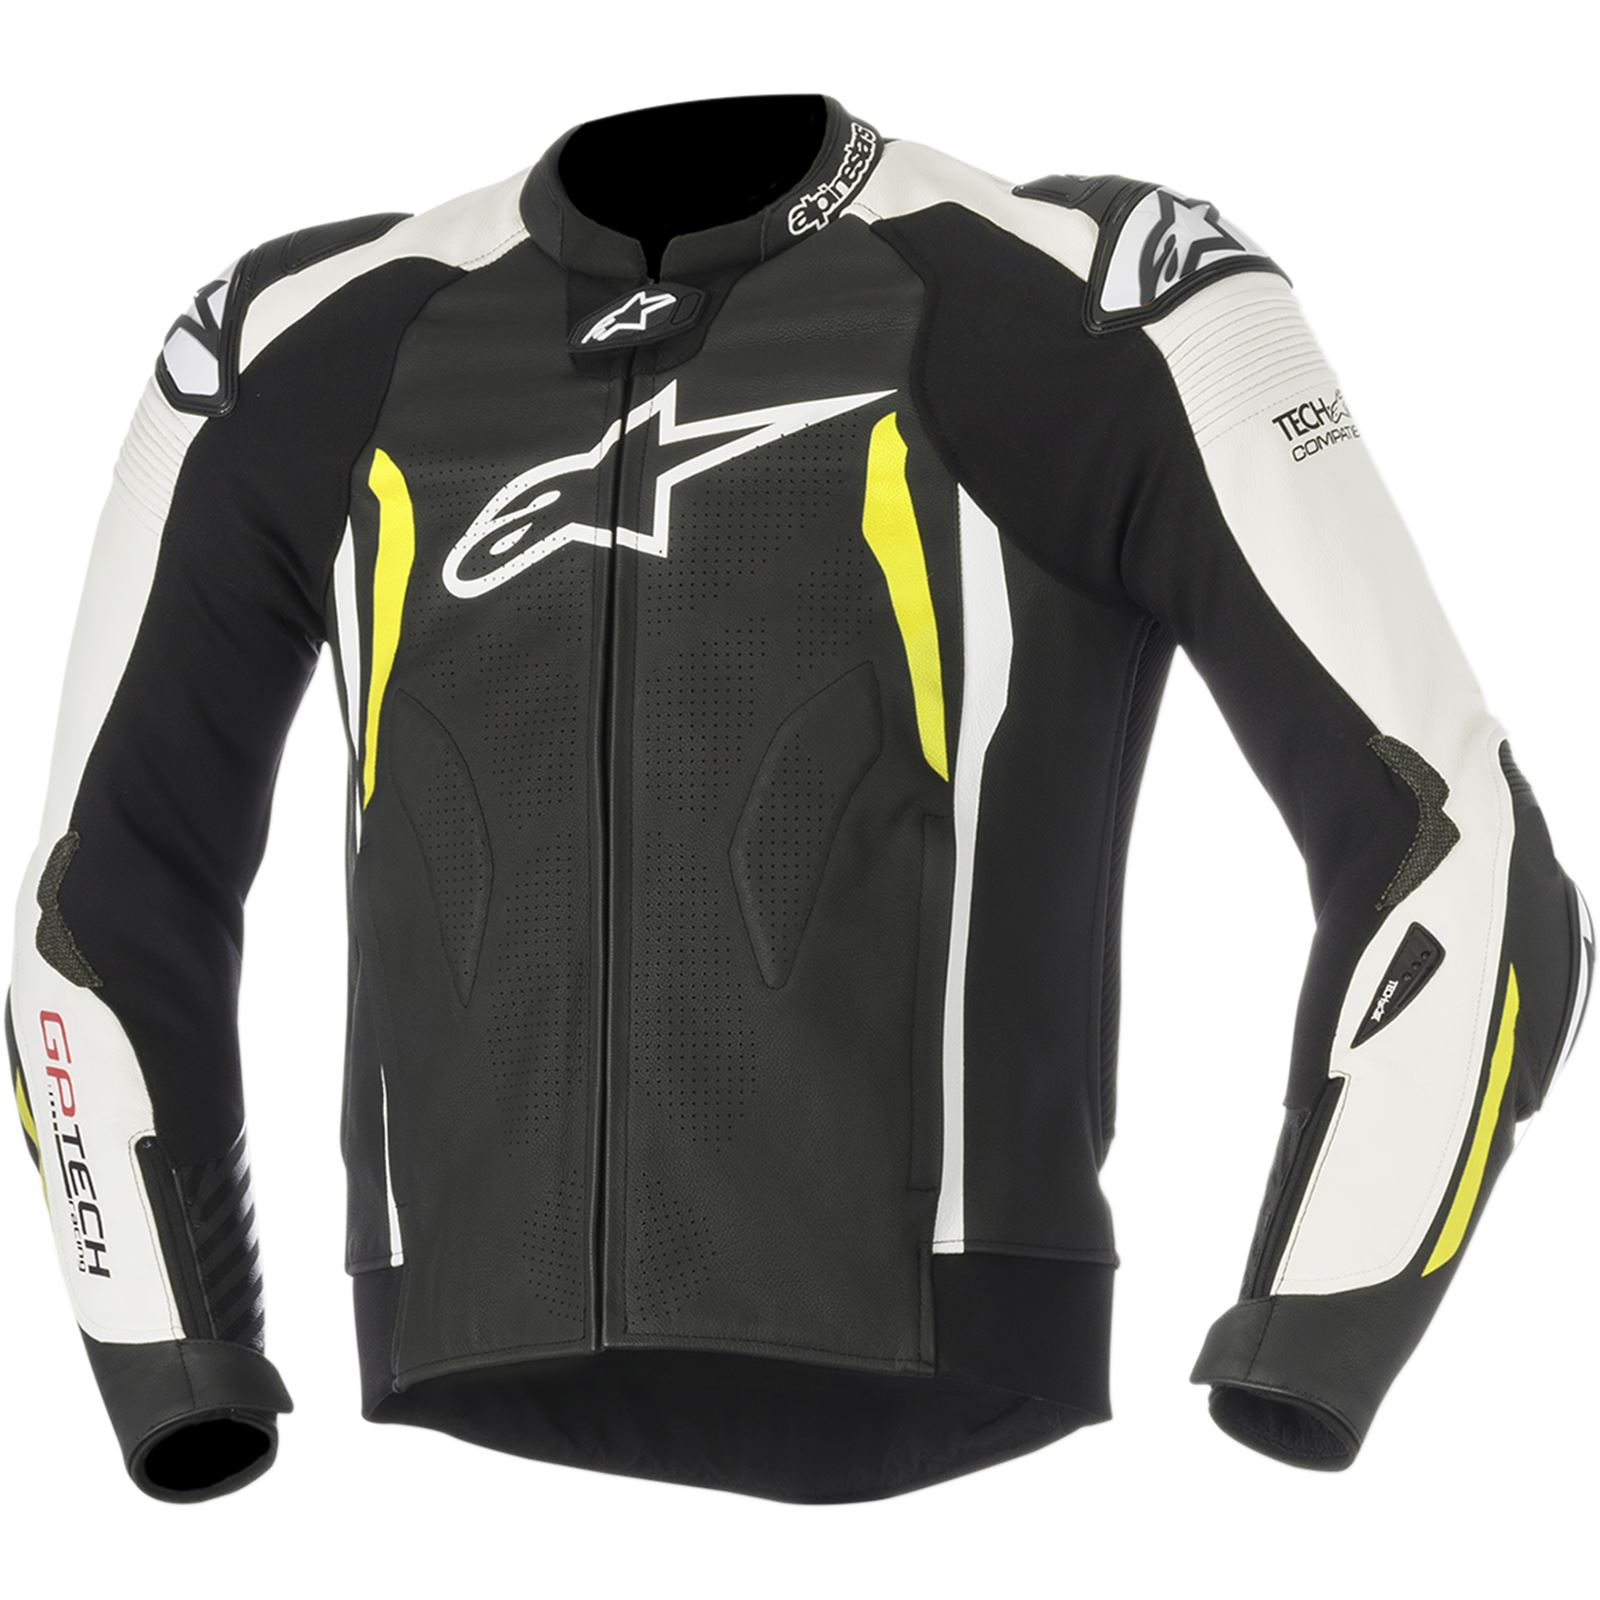 Alpinestars GP Tech v2 Jacket - Black/White/Yellow - Large